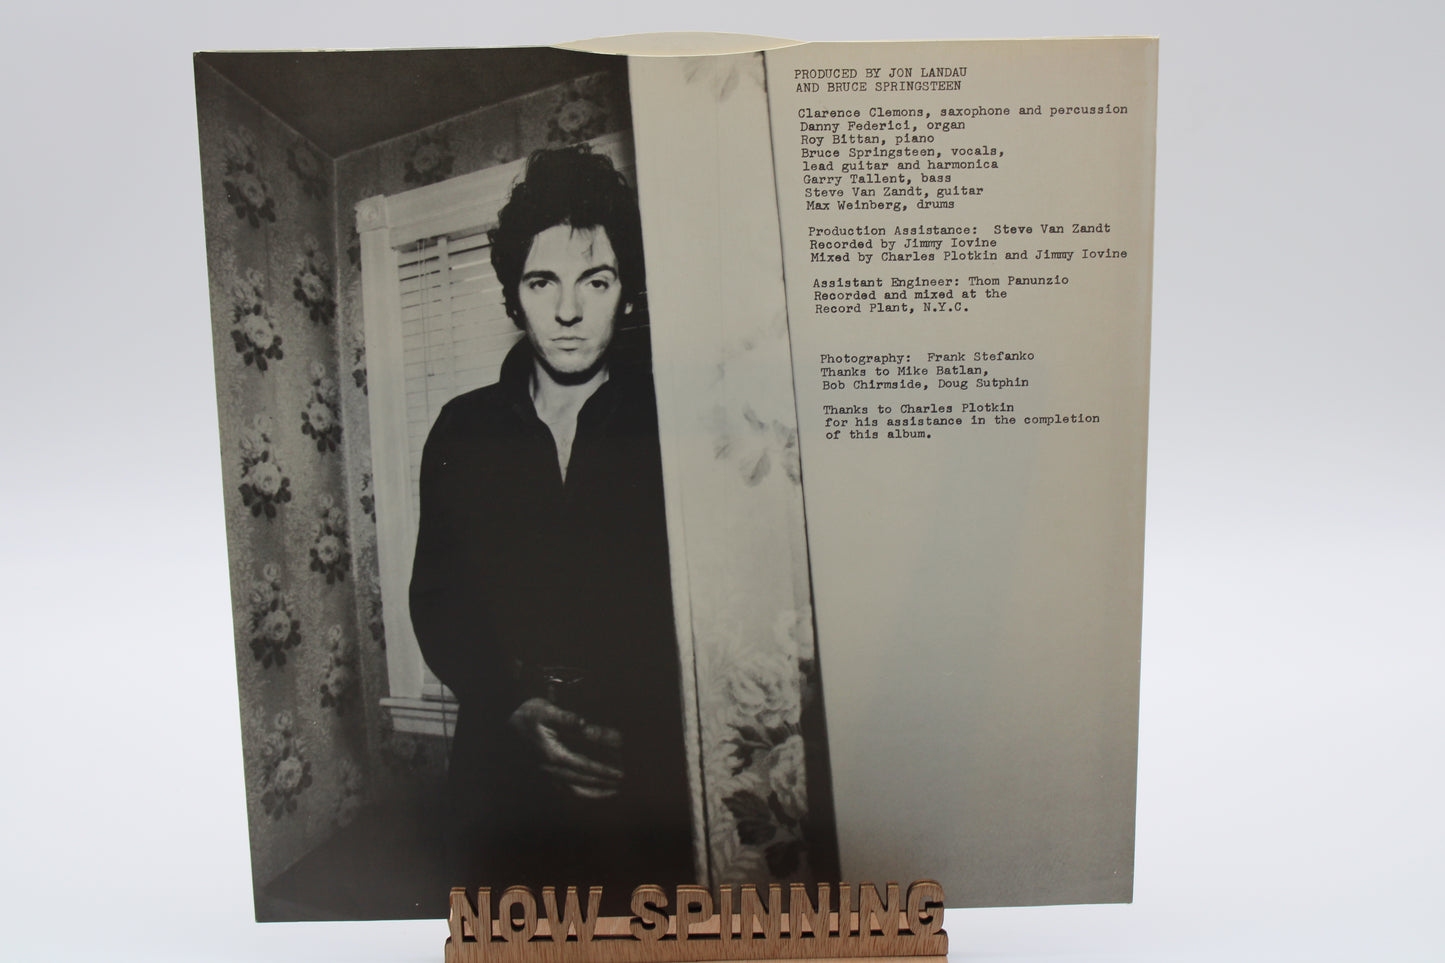 Bruce Springsteen Darkness on the Edge of Town - IRELAND 1978 Original Vinyl Album - Pink Lyrics Insert